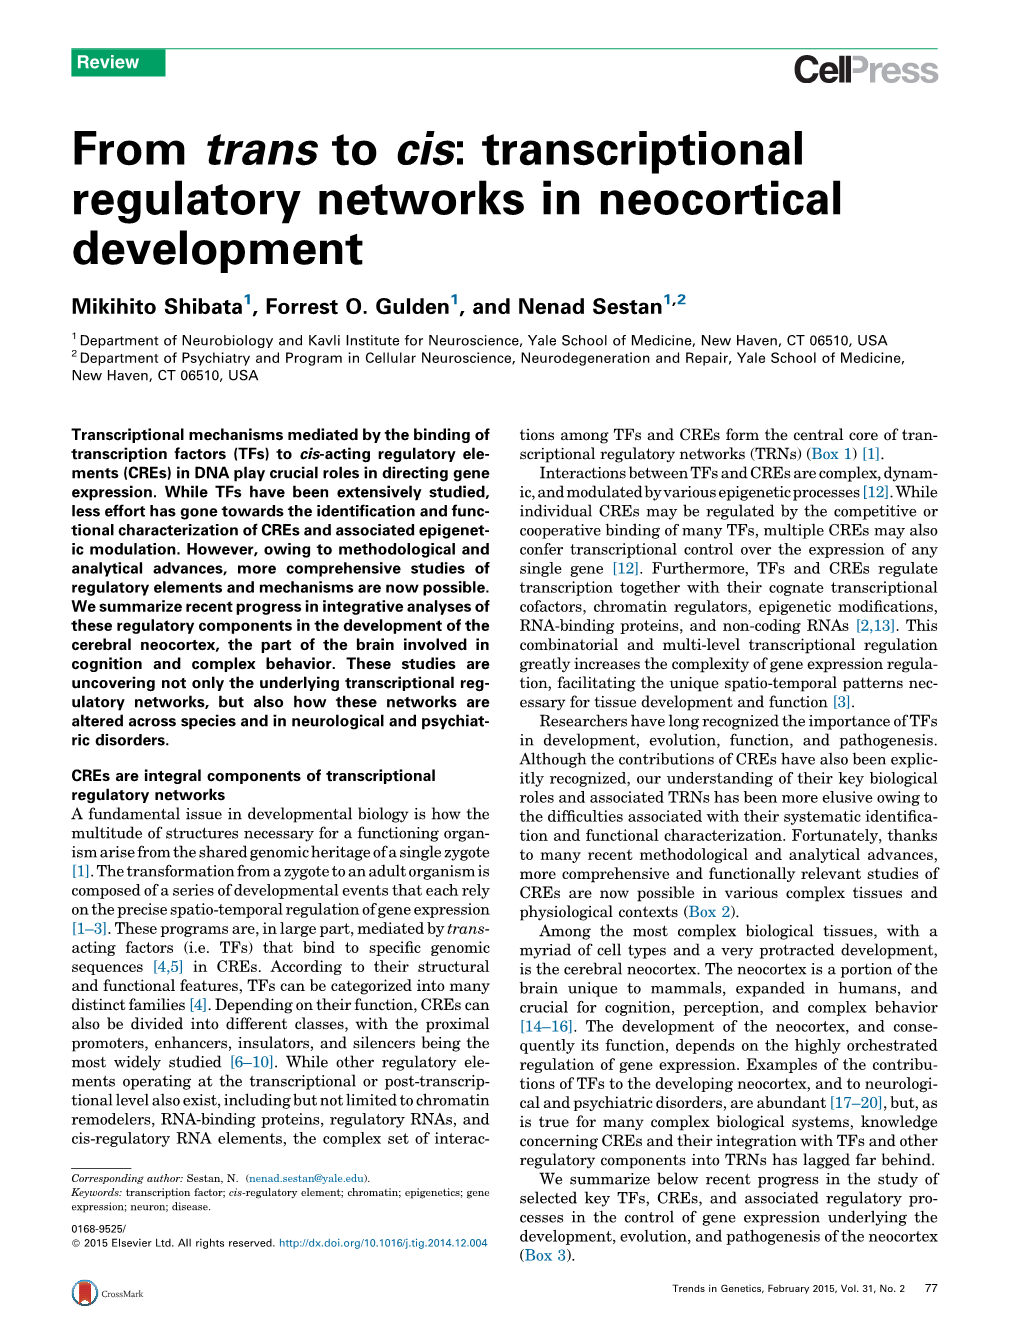 Transcriptional Regulatory Networks in Neocortical Development